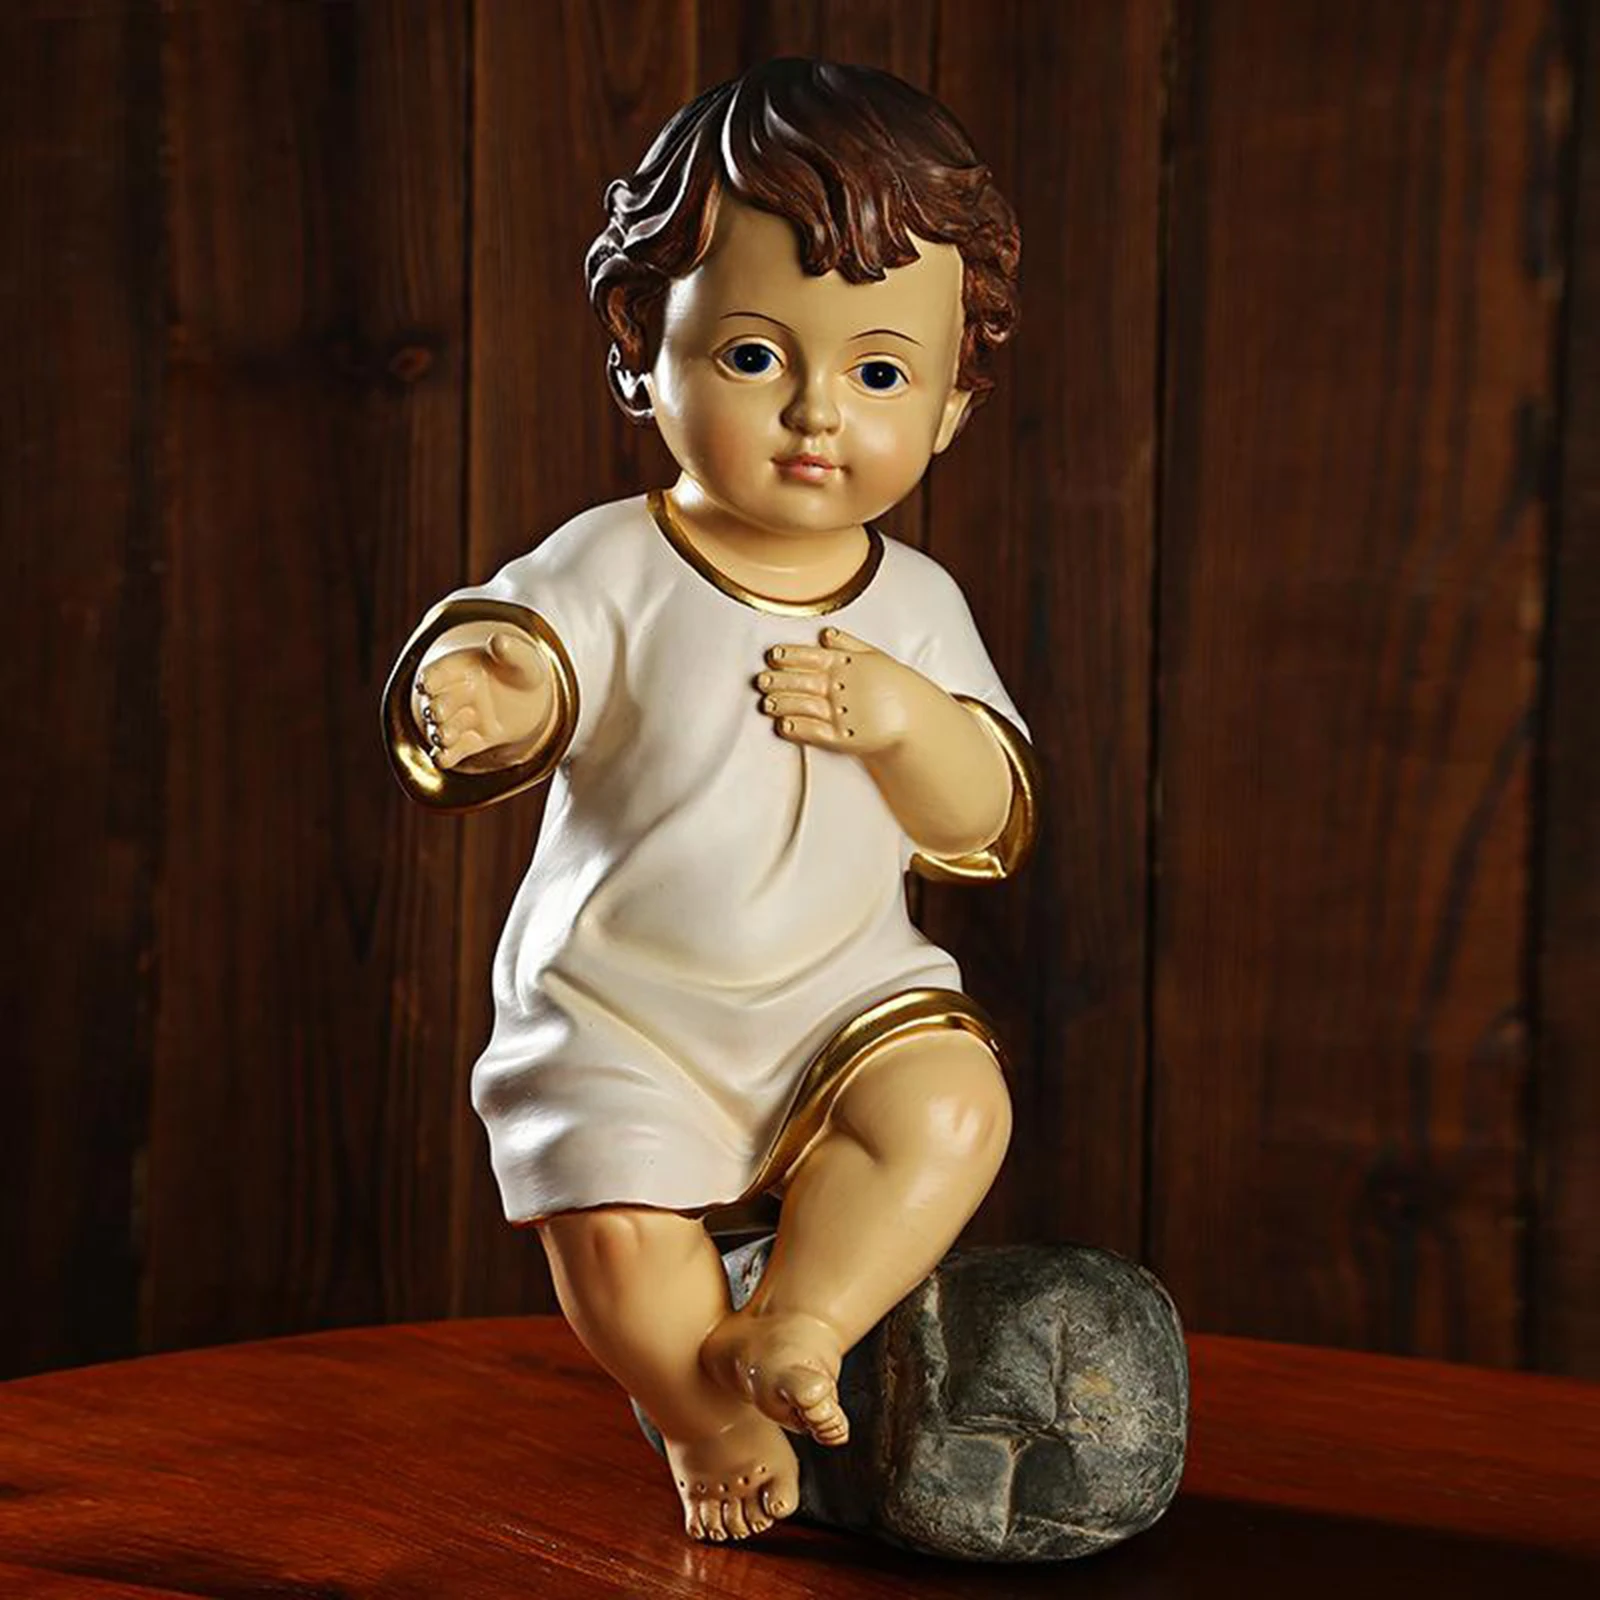 European Baby Statue Jesus Doll Statue Figurine Indoor Outdoor Home Little Boy Sculpture Statuette Collection Memorial Statue